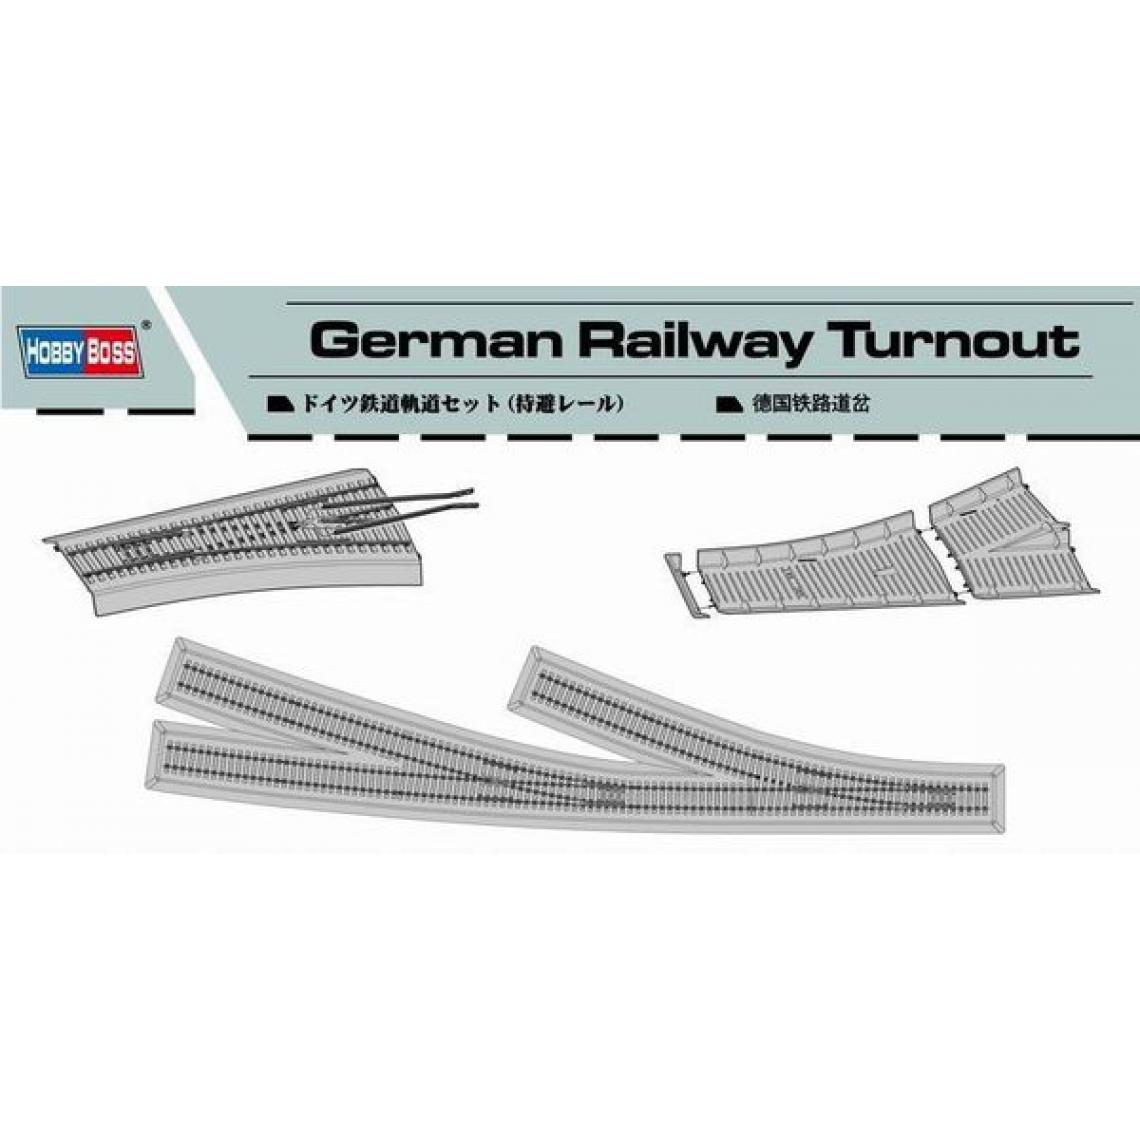 Hobby Boss - German Railway Turnout - 1:72e - Hobby Boss - Accessoires et pièces